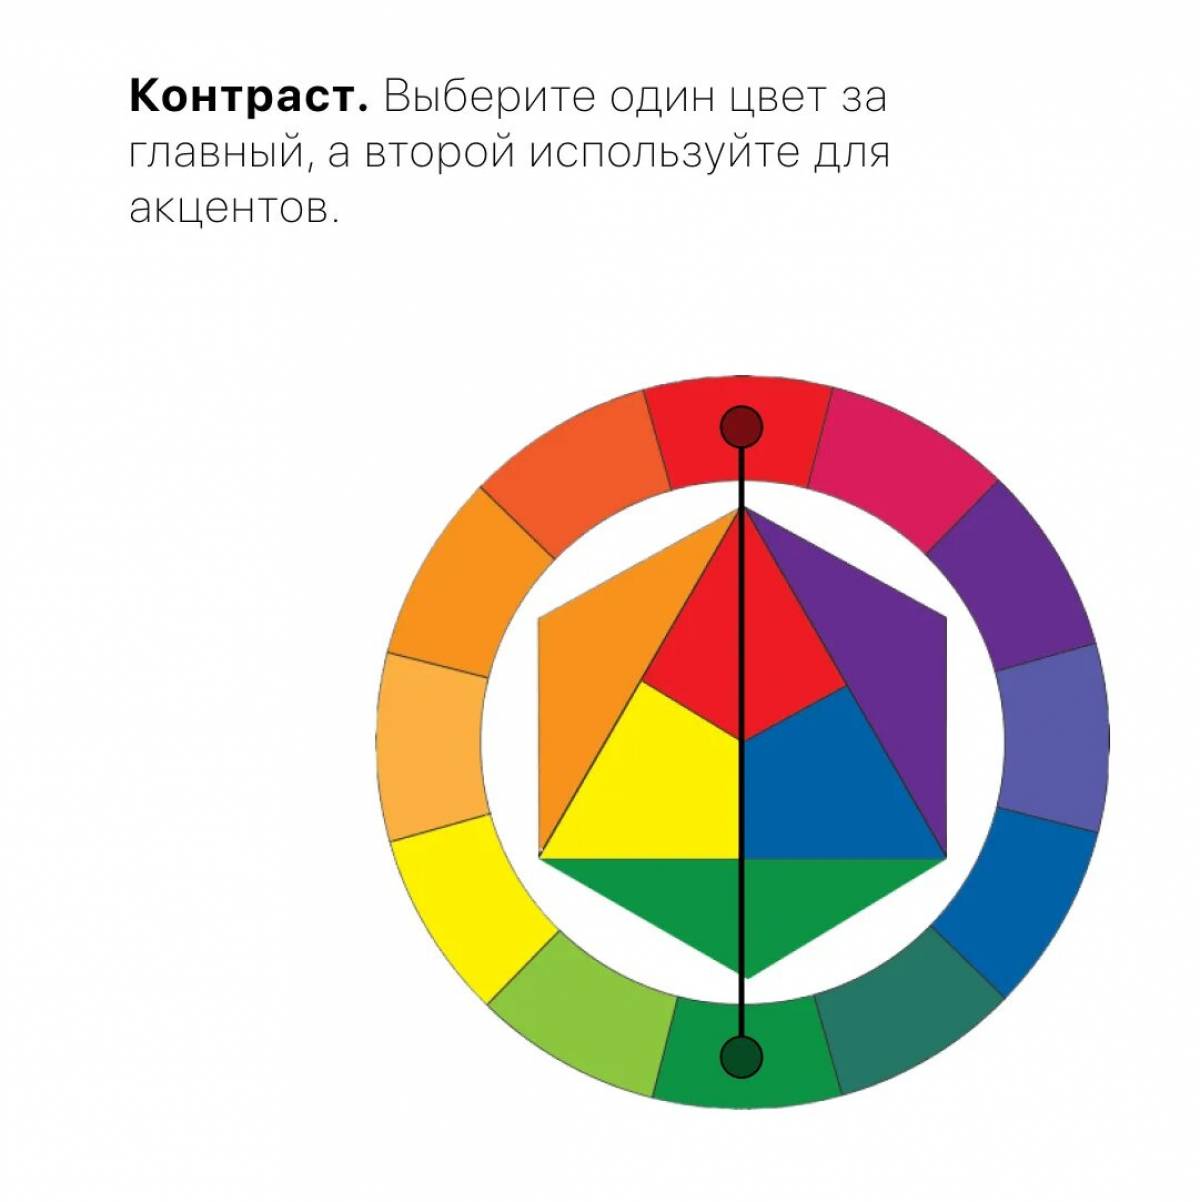 Itten's amazing color wheel page